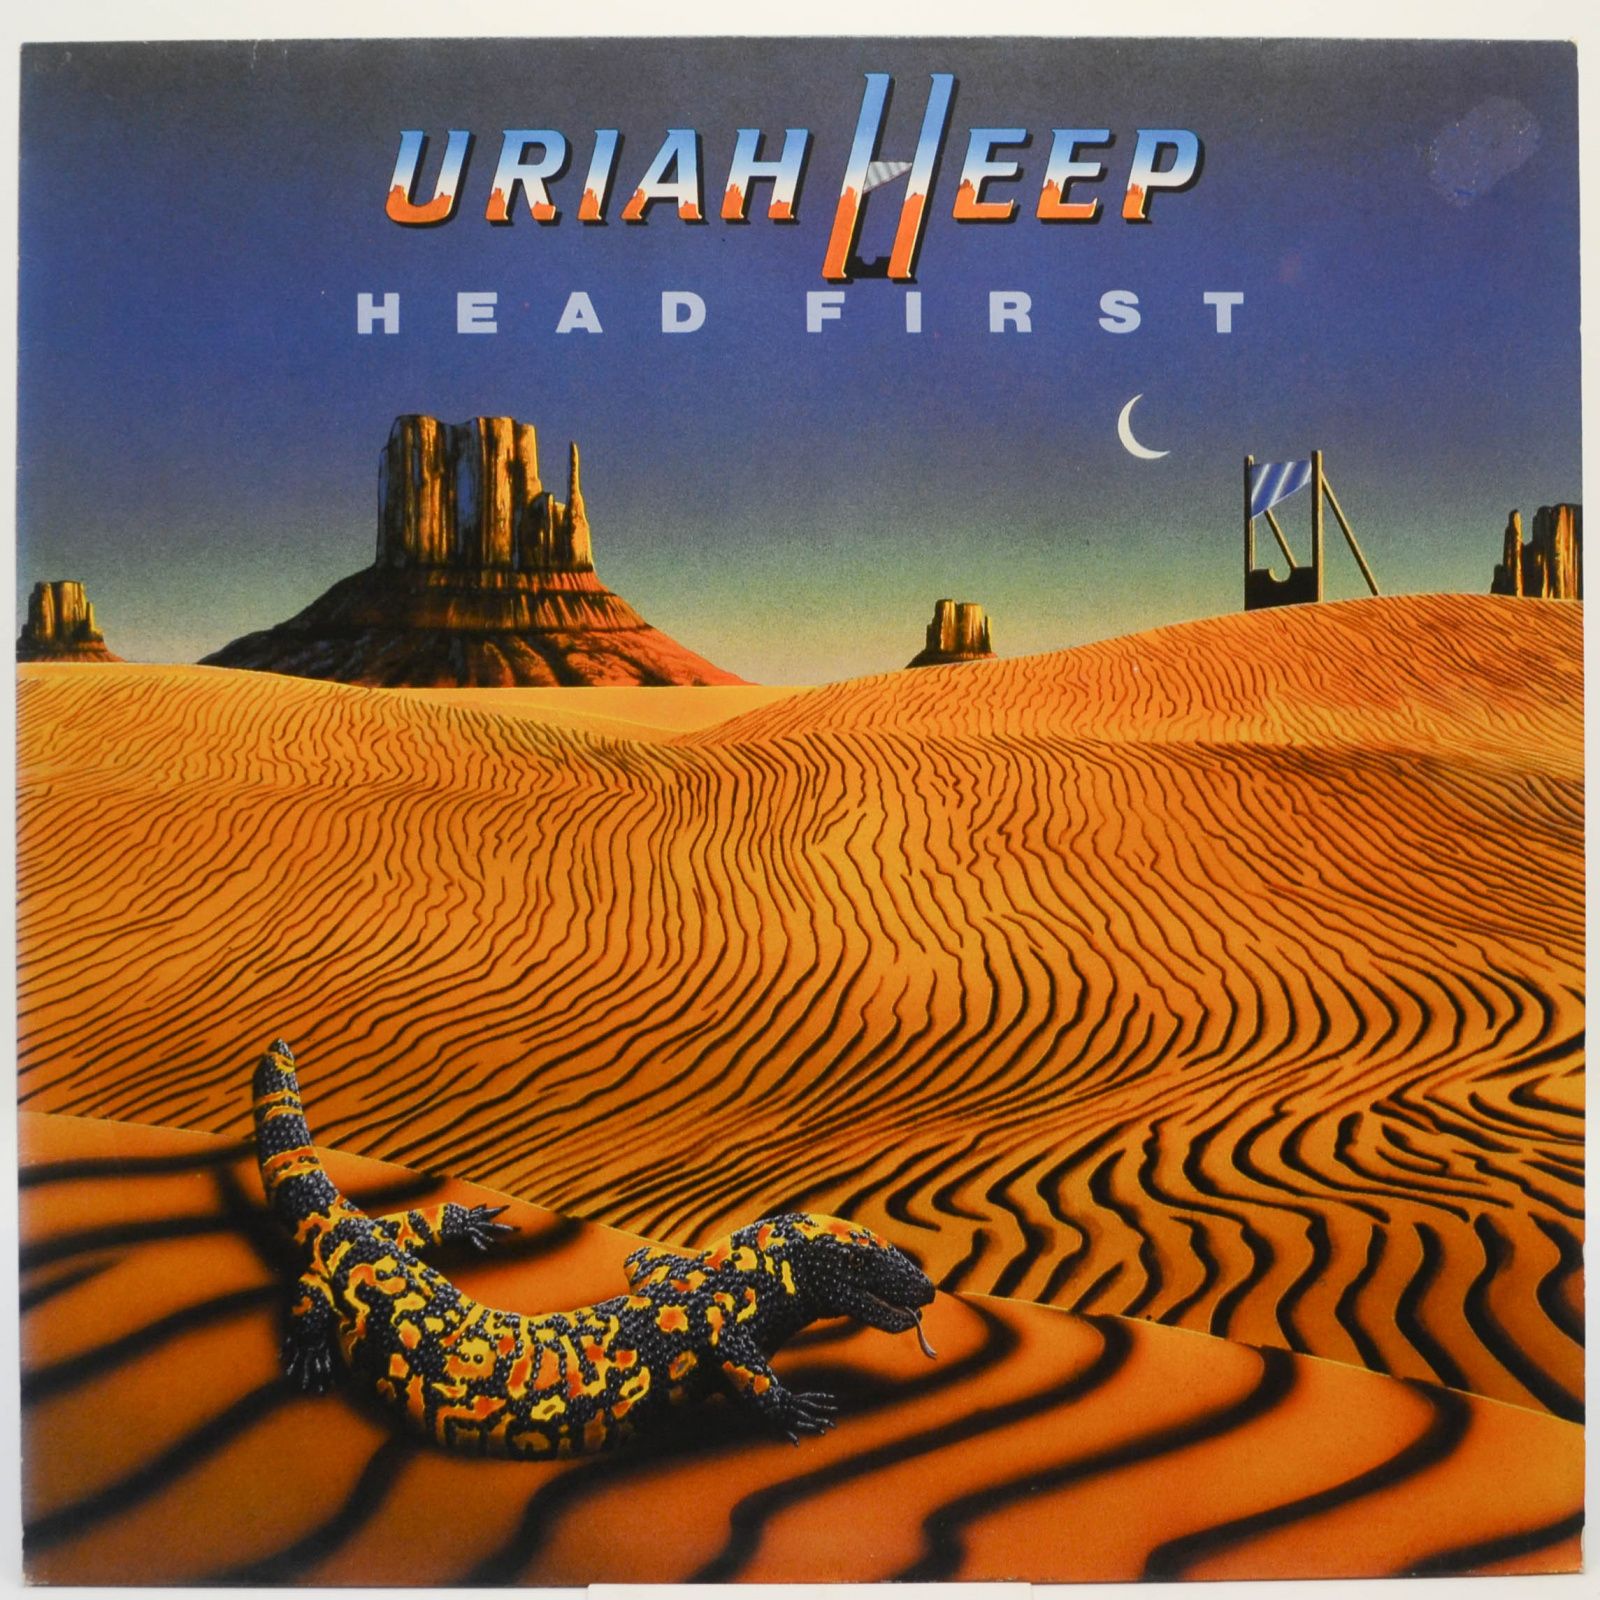 Uriah Heep — Head First, 1983